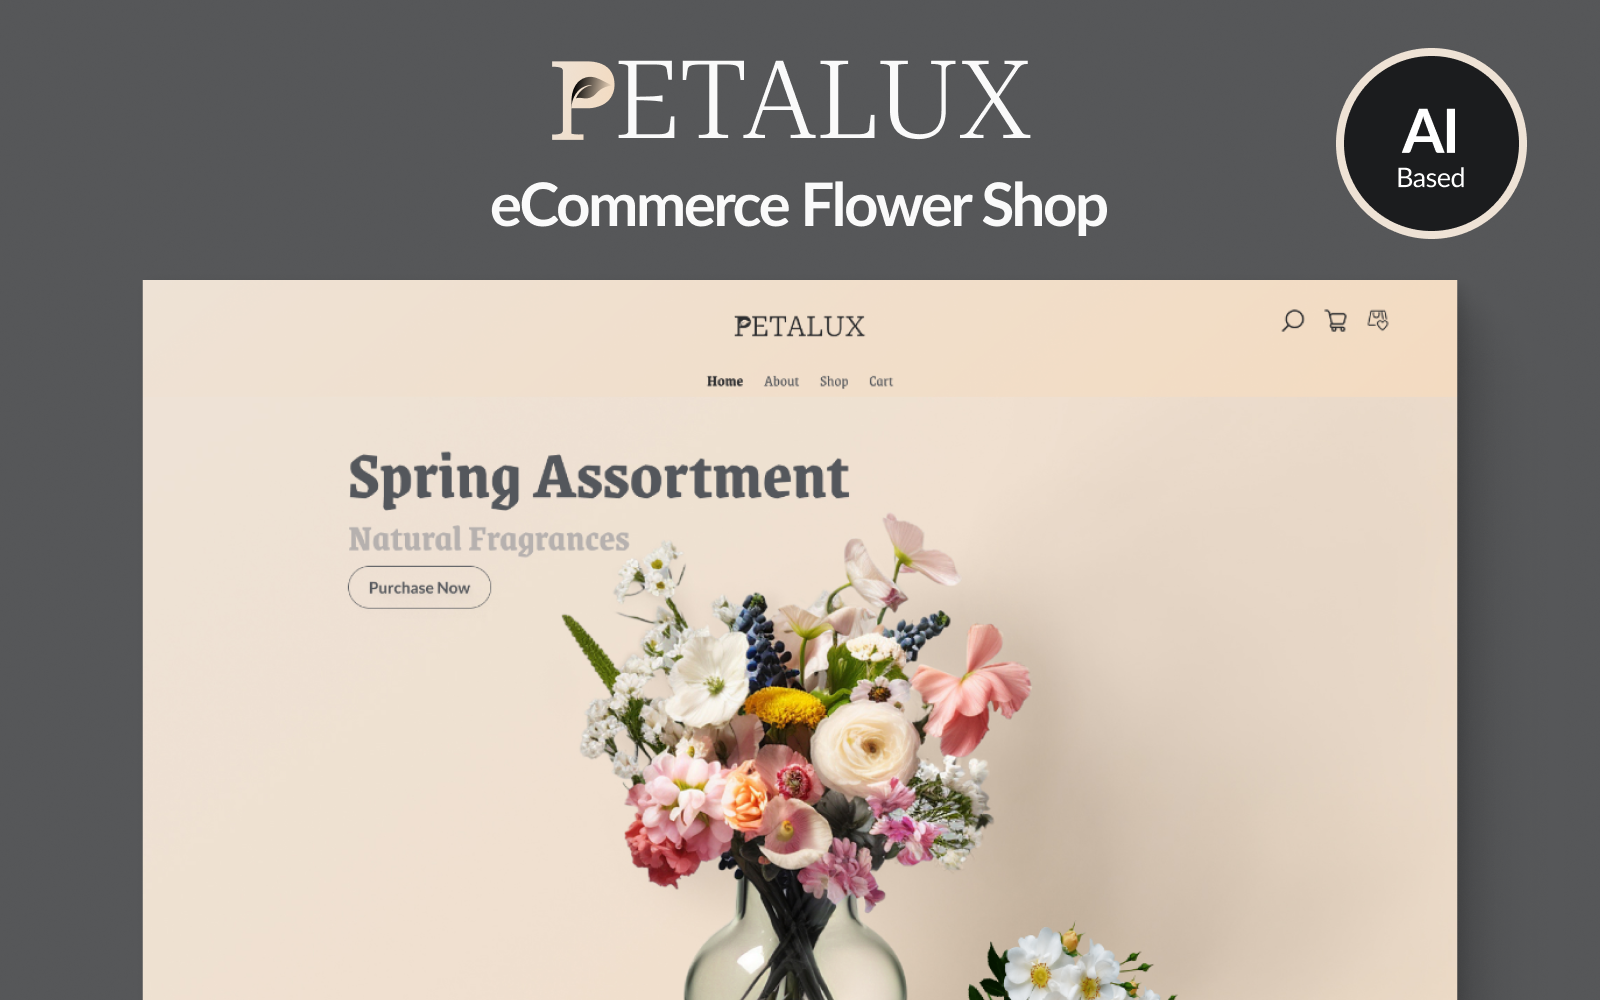 Blooming Beauty: Petalux - Your Exquisite Flower Shop eCommerce HTML Template